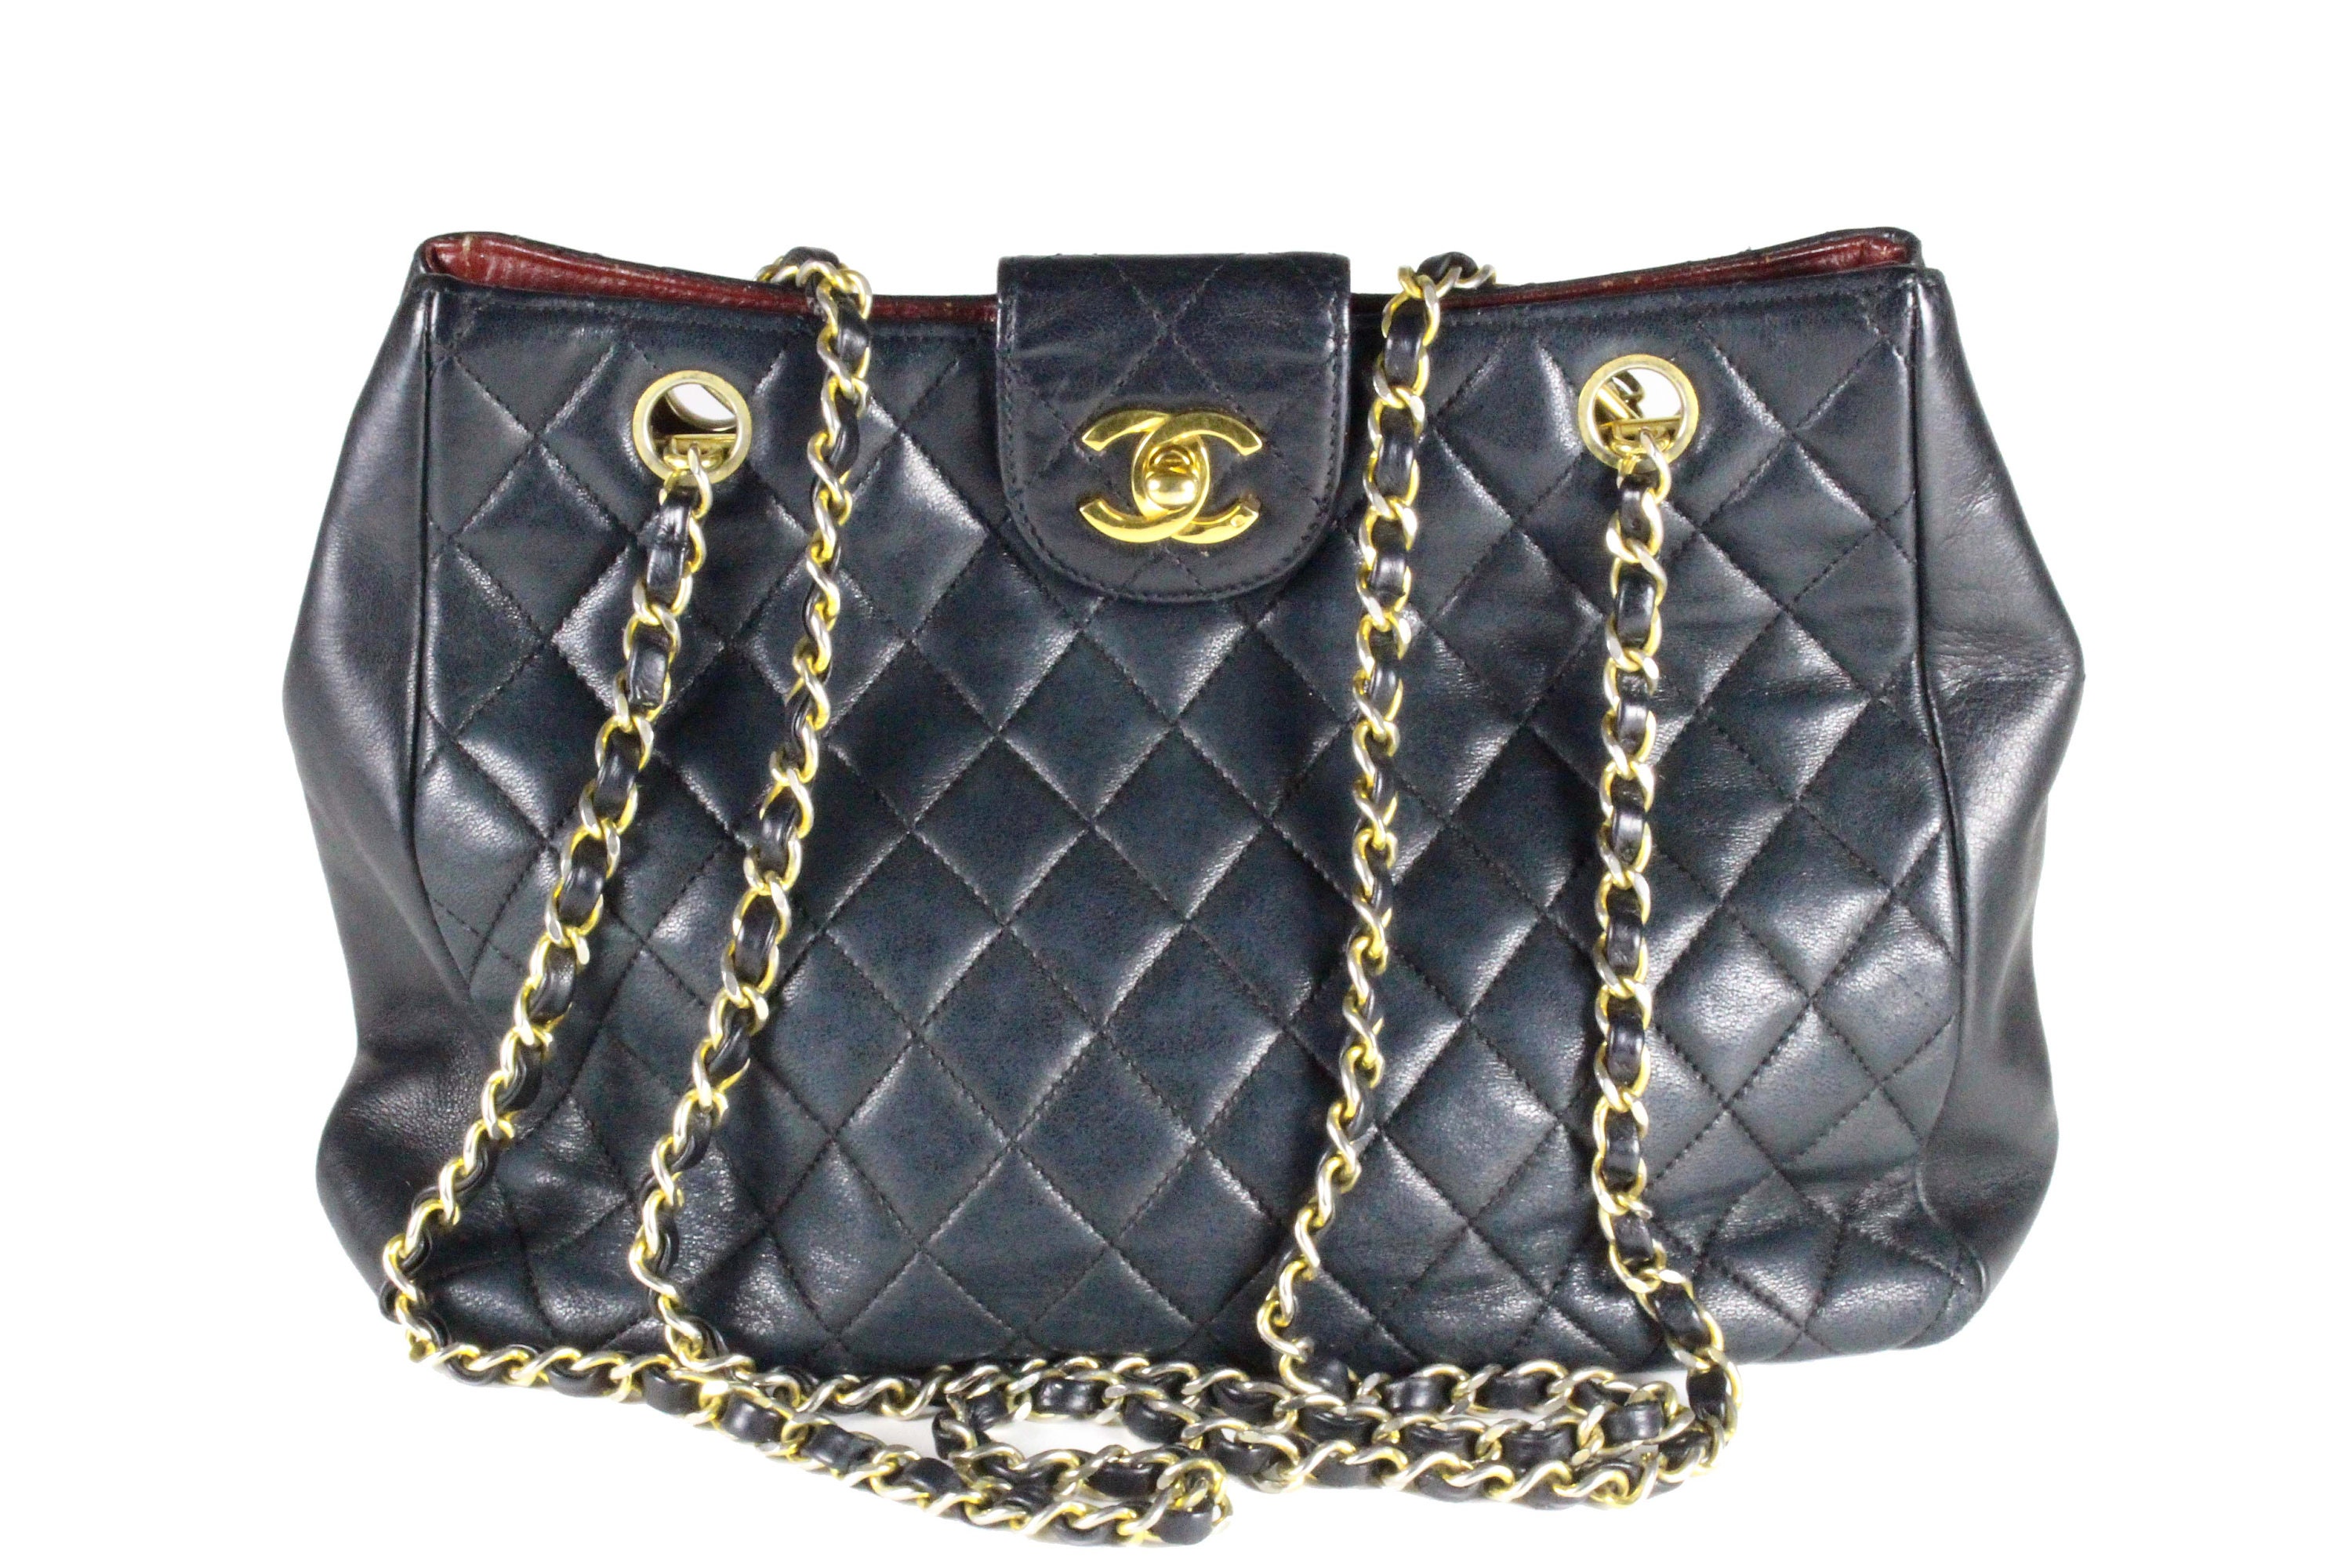 Vintage Chanel Bags & Purses for Sale at Auction